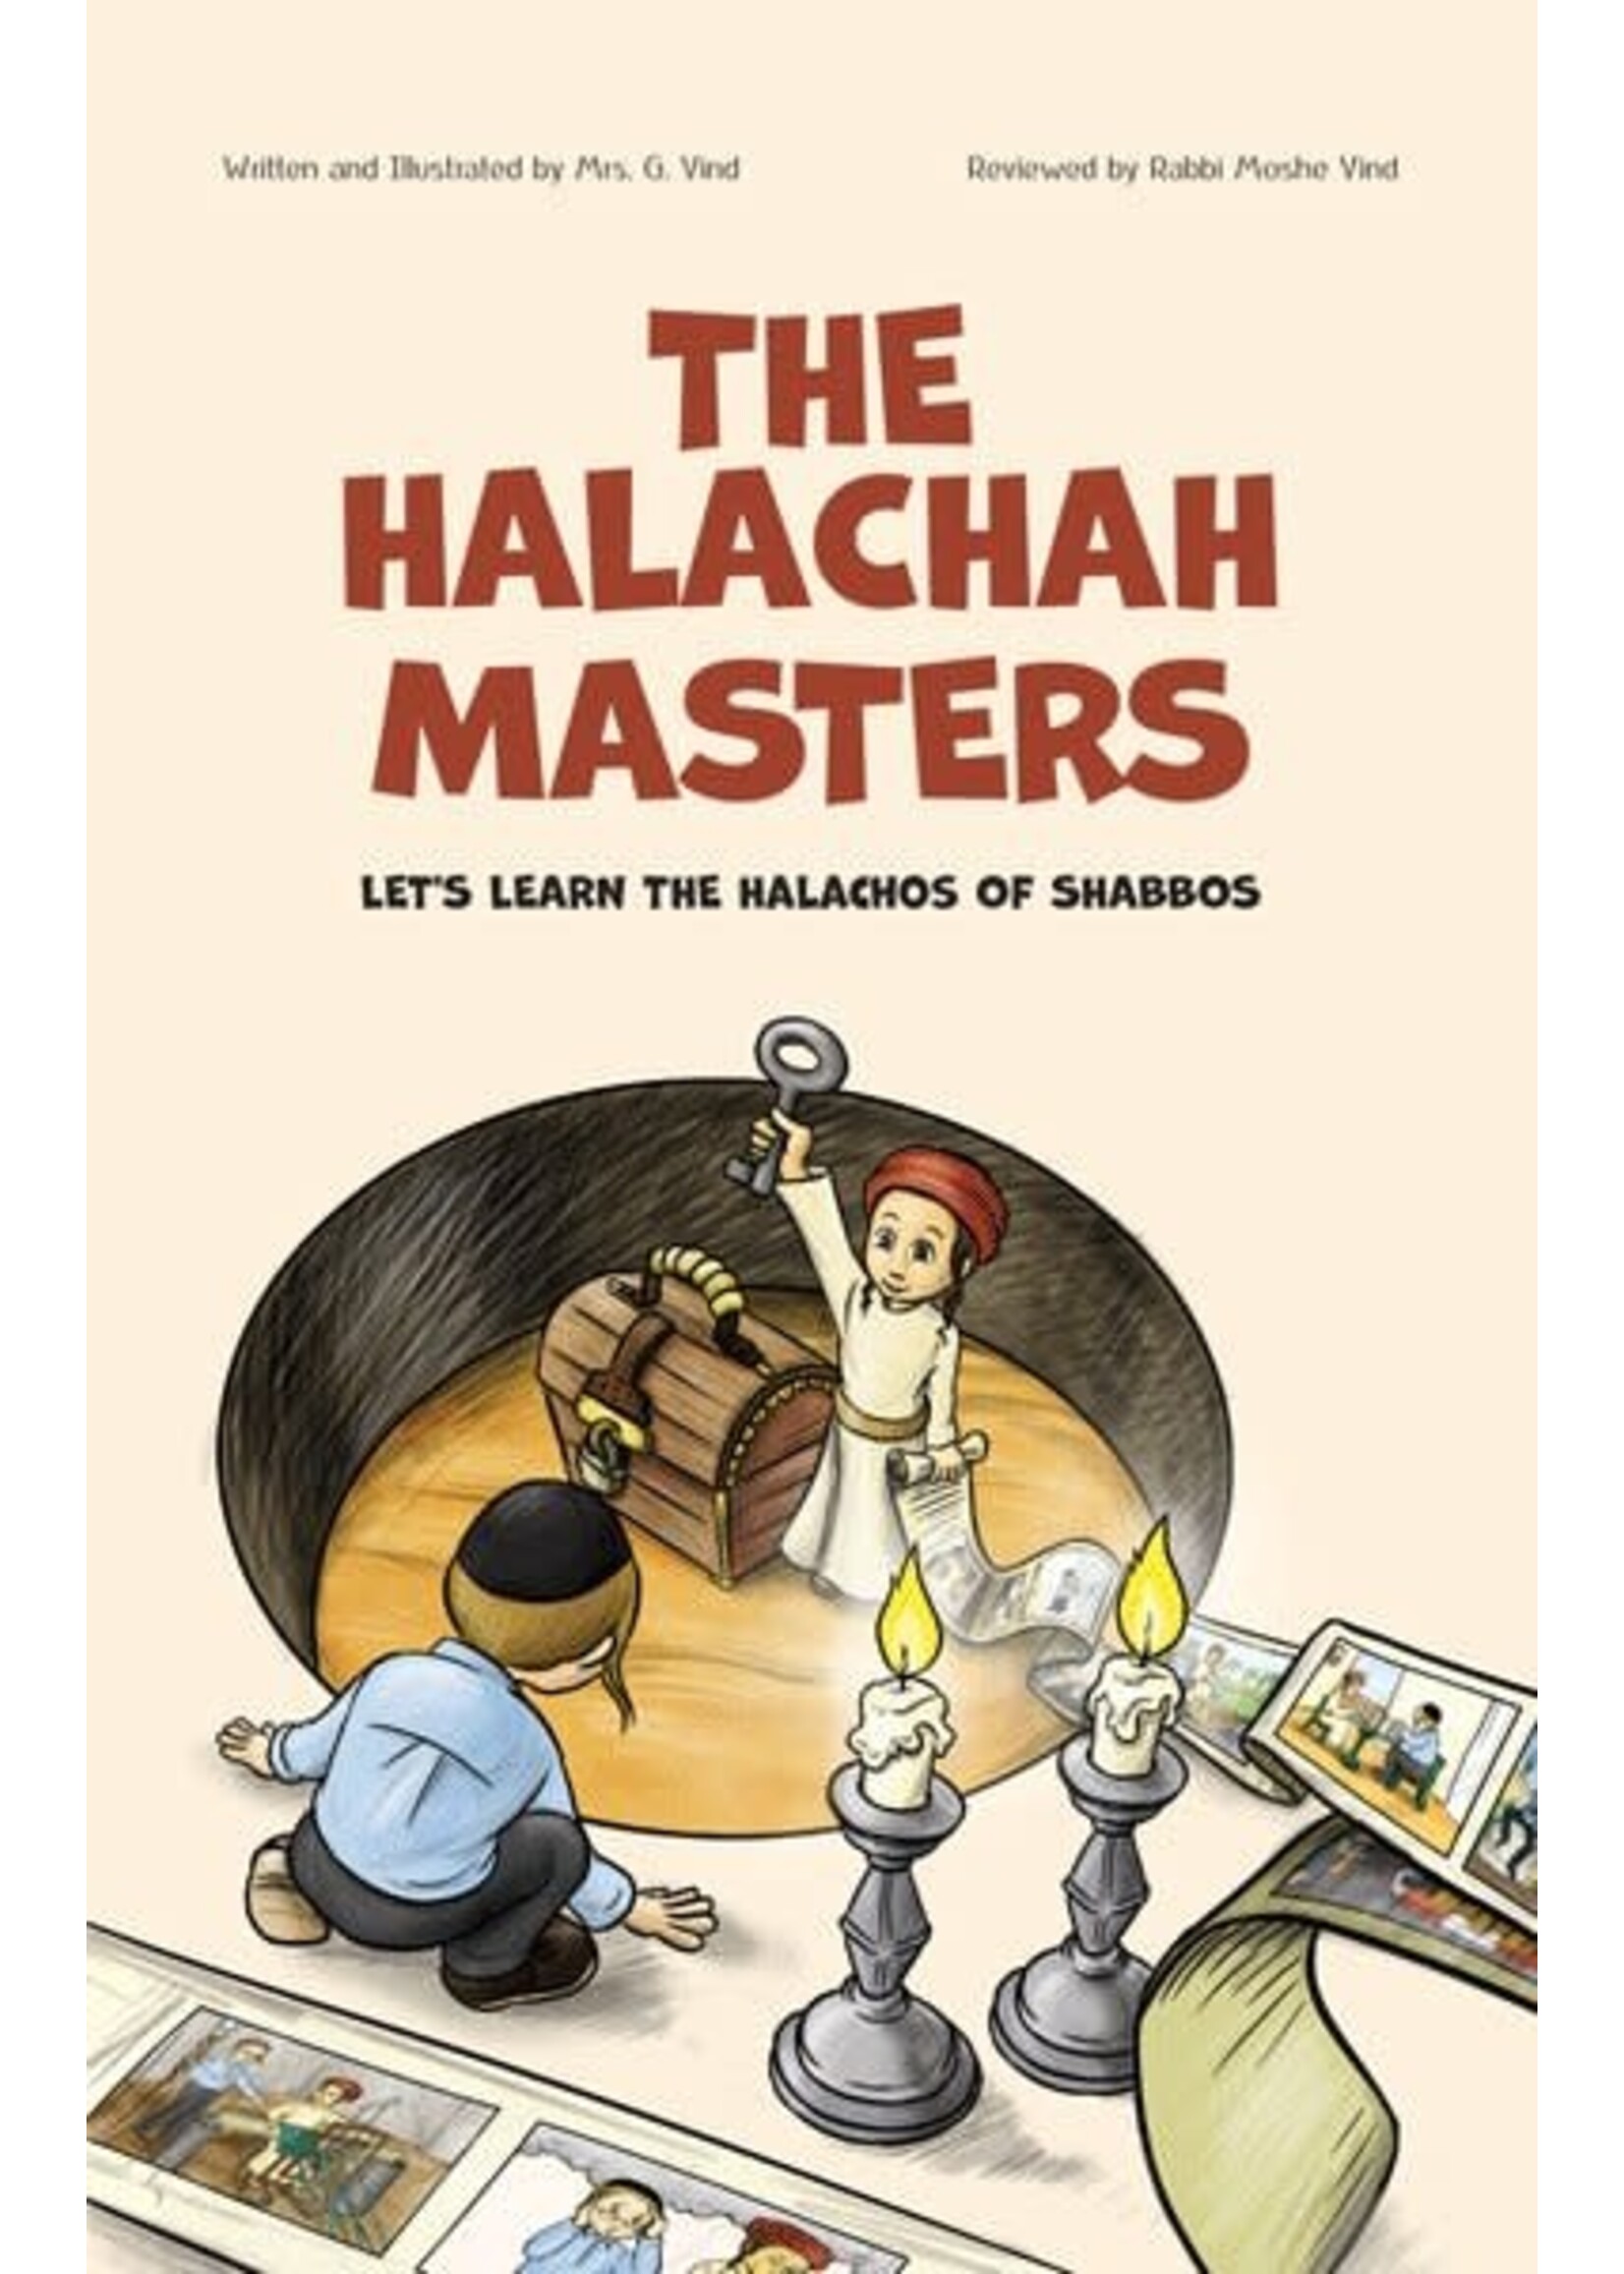 THE HALACHAH MASTERS